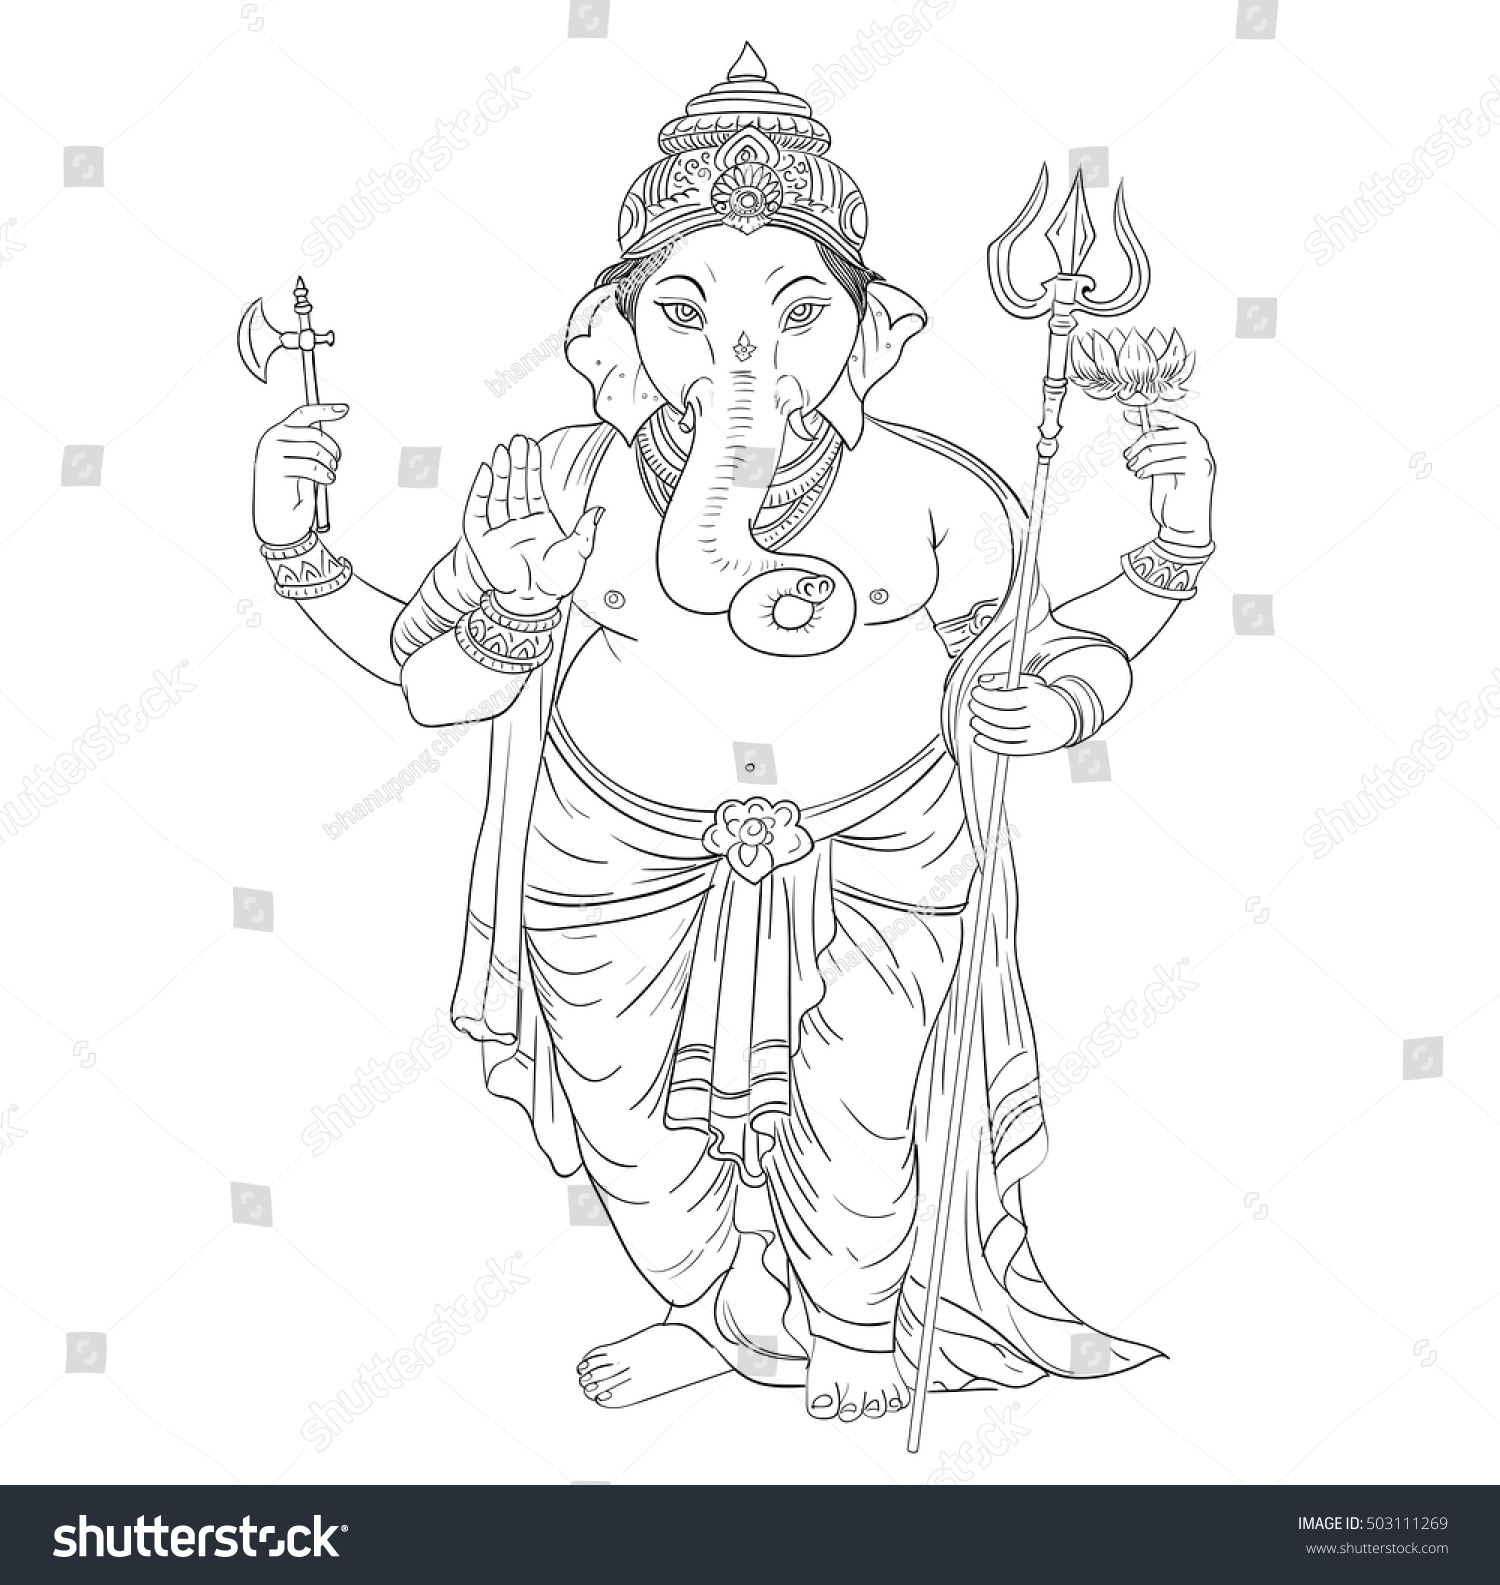 Ganesha Drawing Vector - 503111269 : Shutterstock